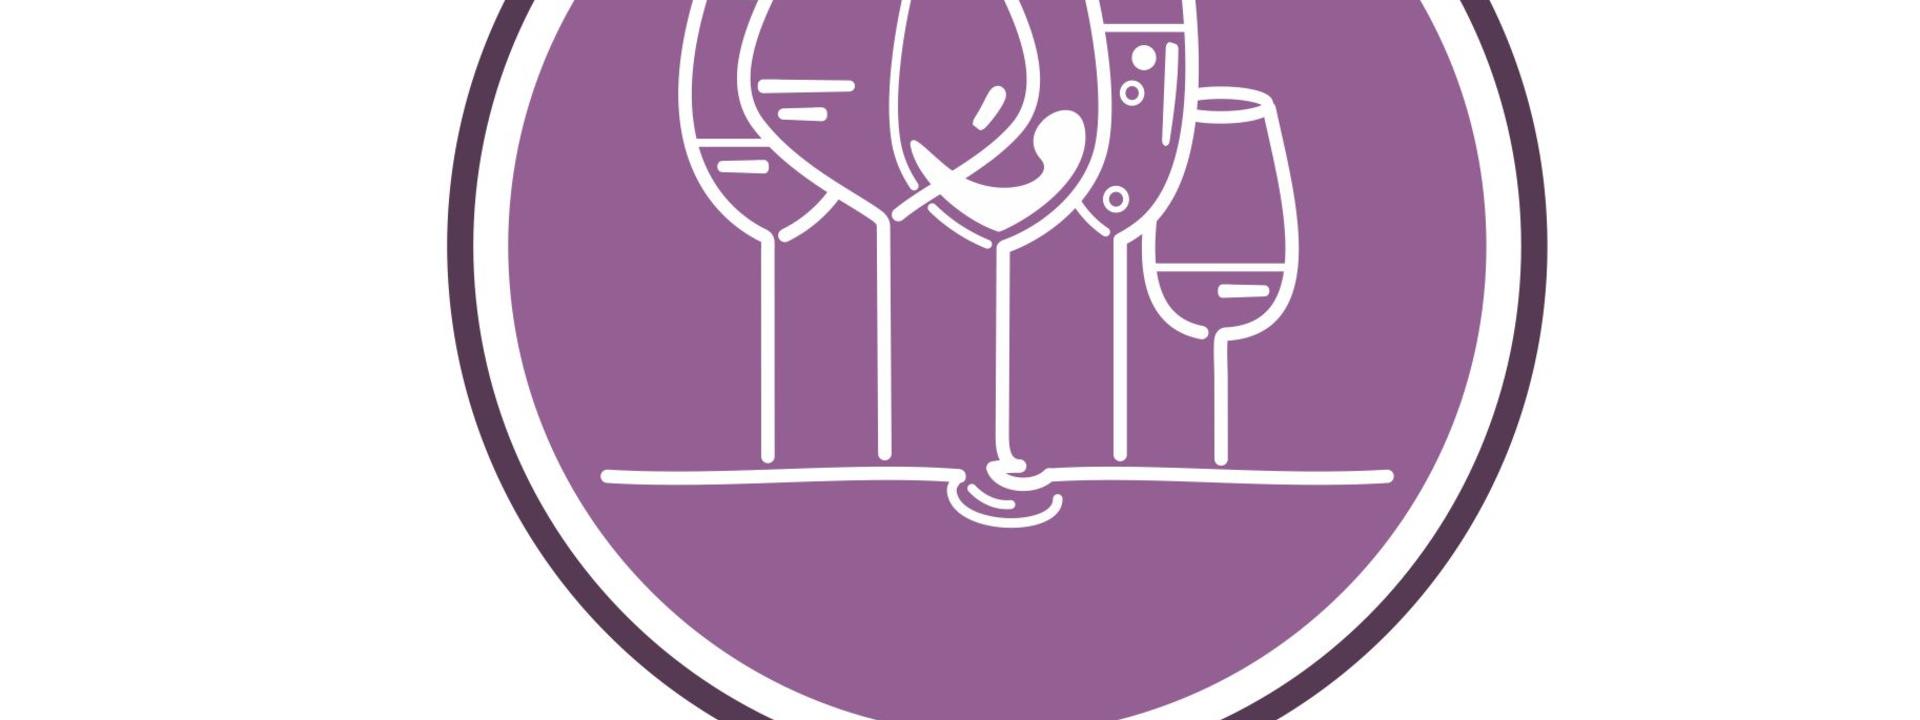 wine-tasting-party-logo-letras-afuera.jpg